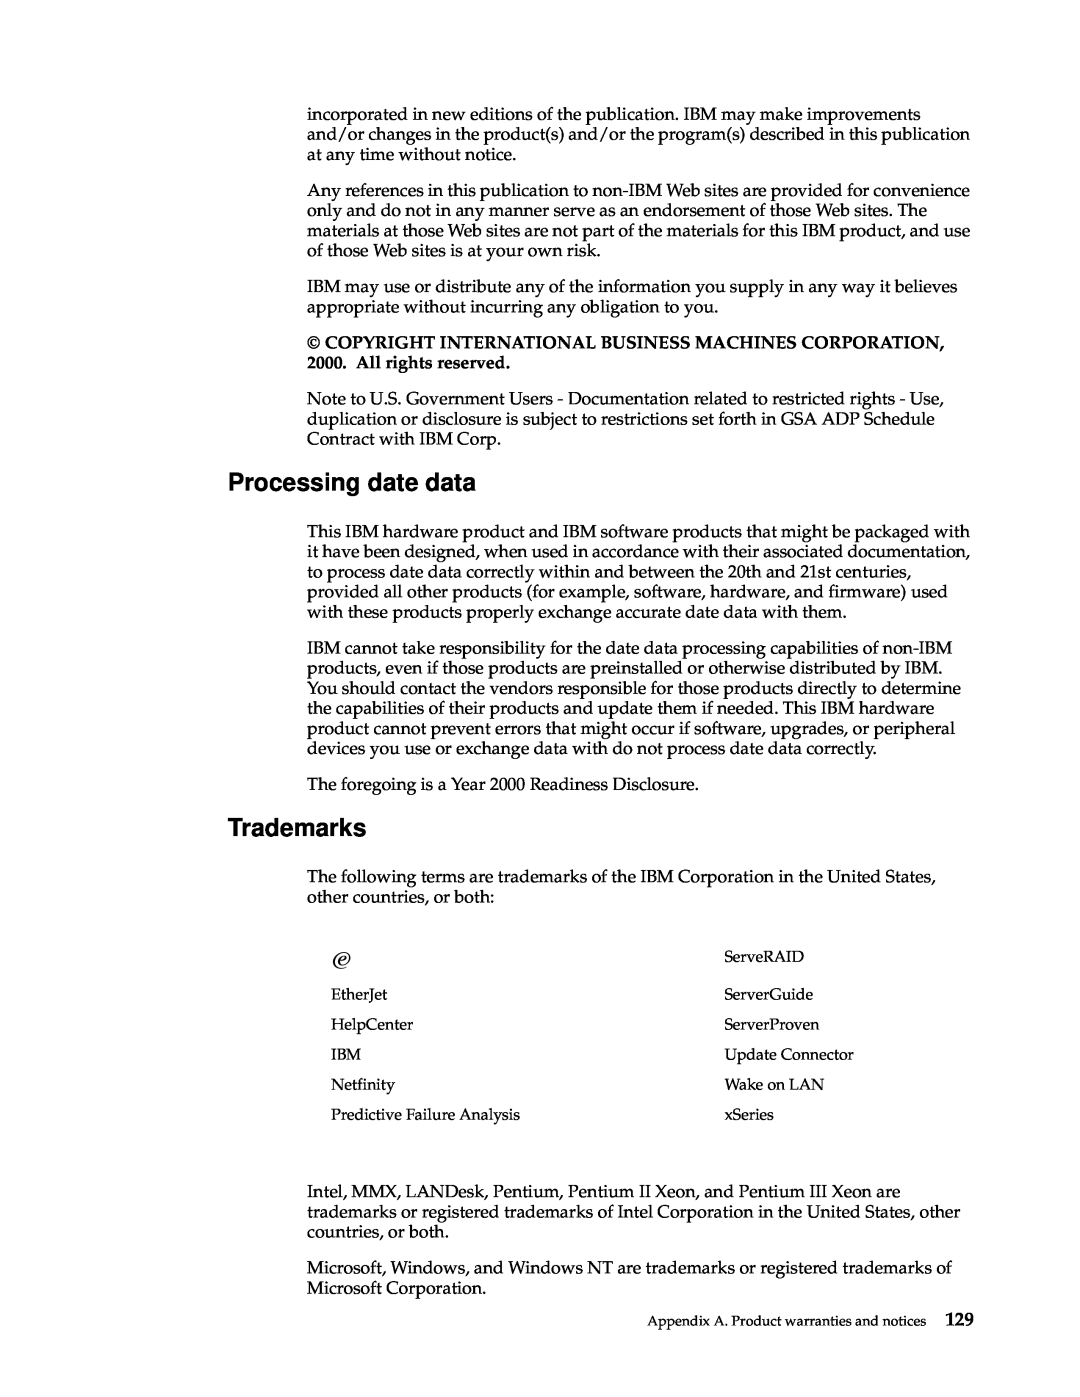 IBM 220 manual Processing date data, Trademarks 